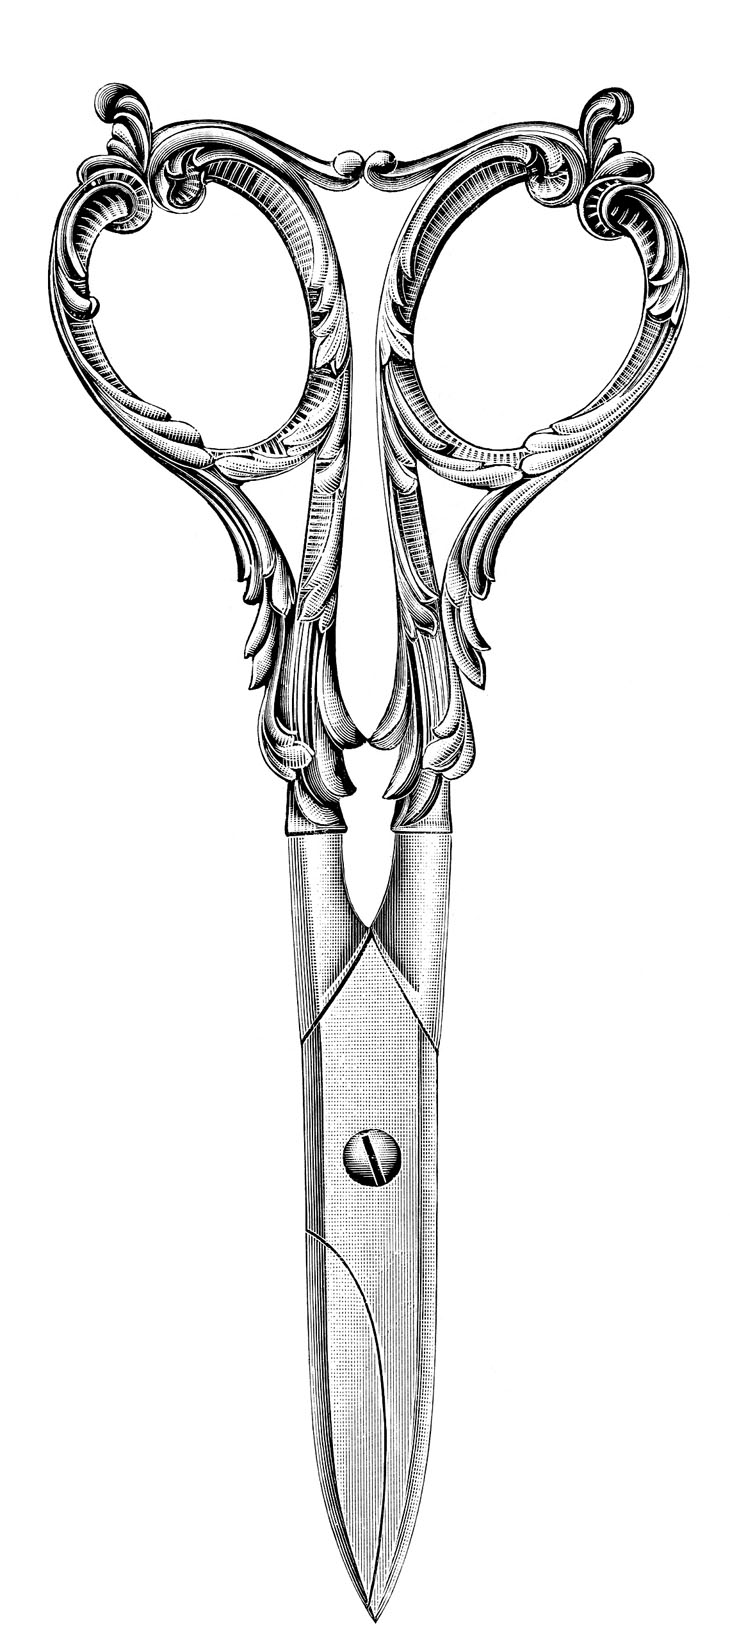 Fancy Ornate Sewing Scissors Clip Art Image